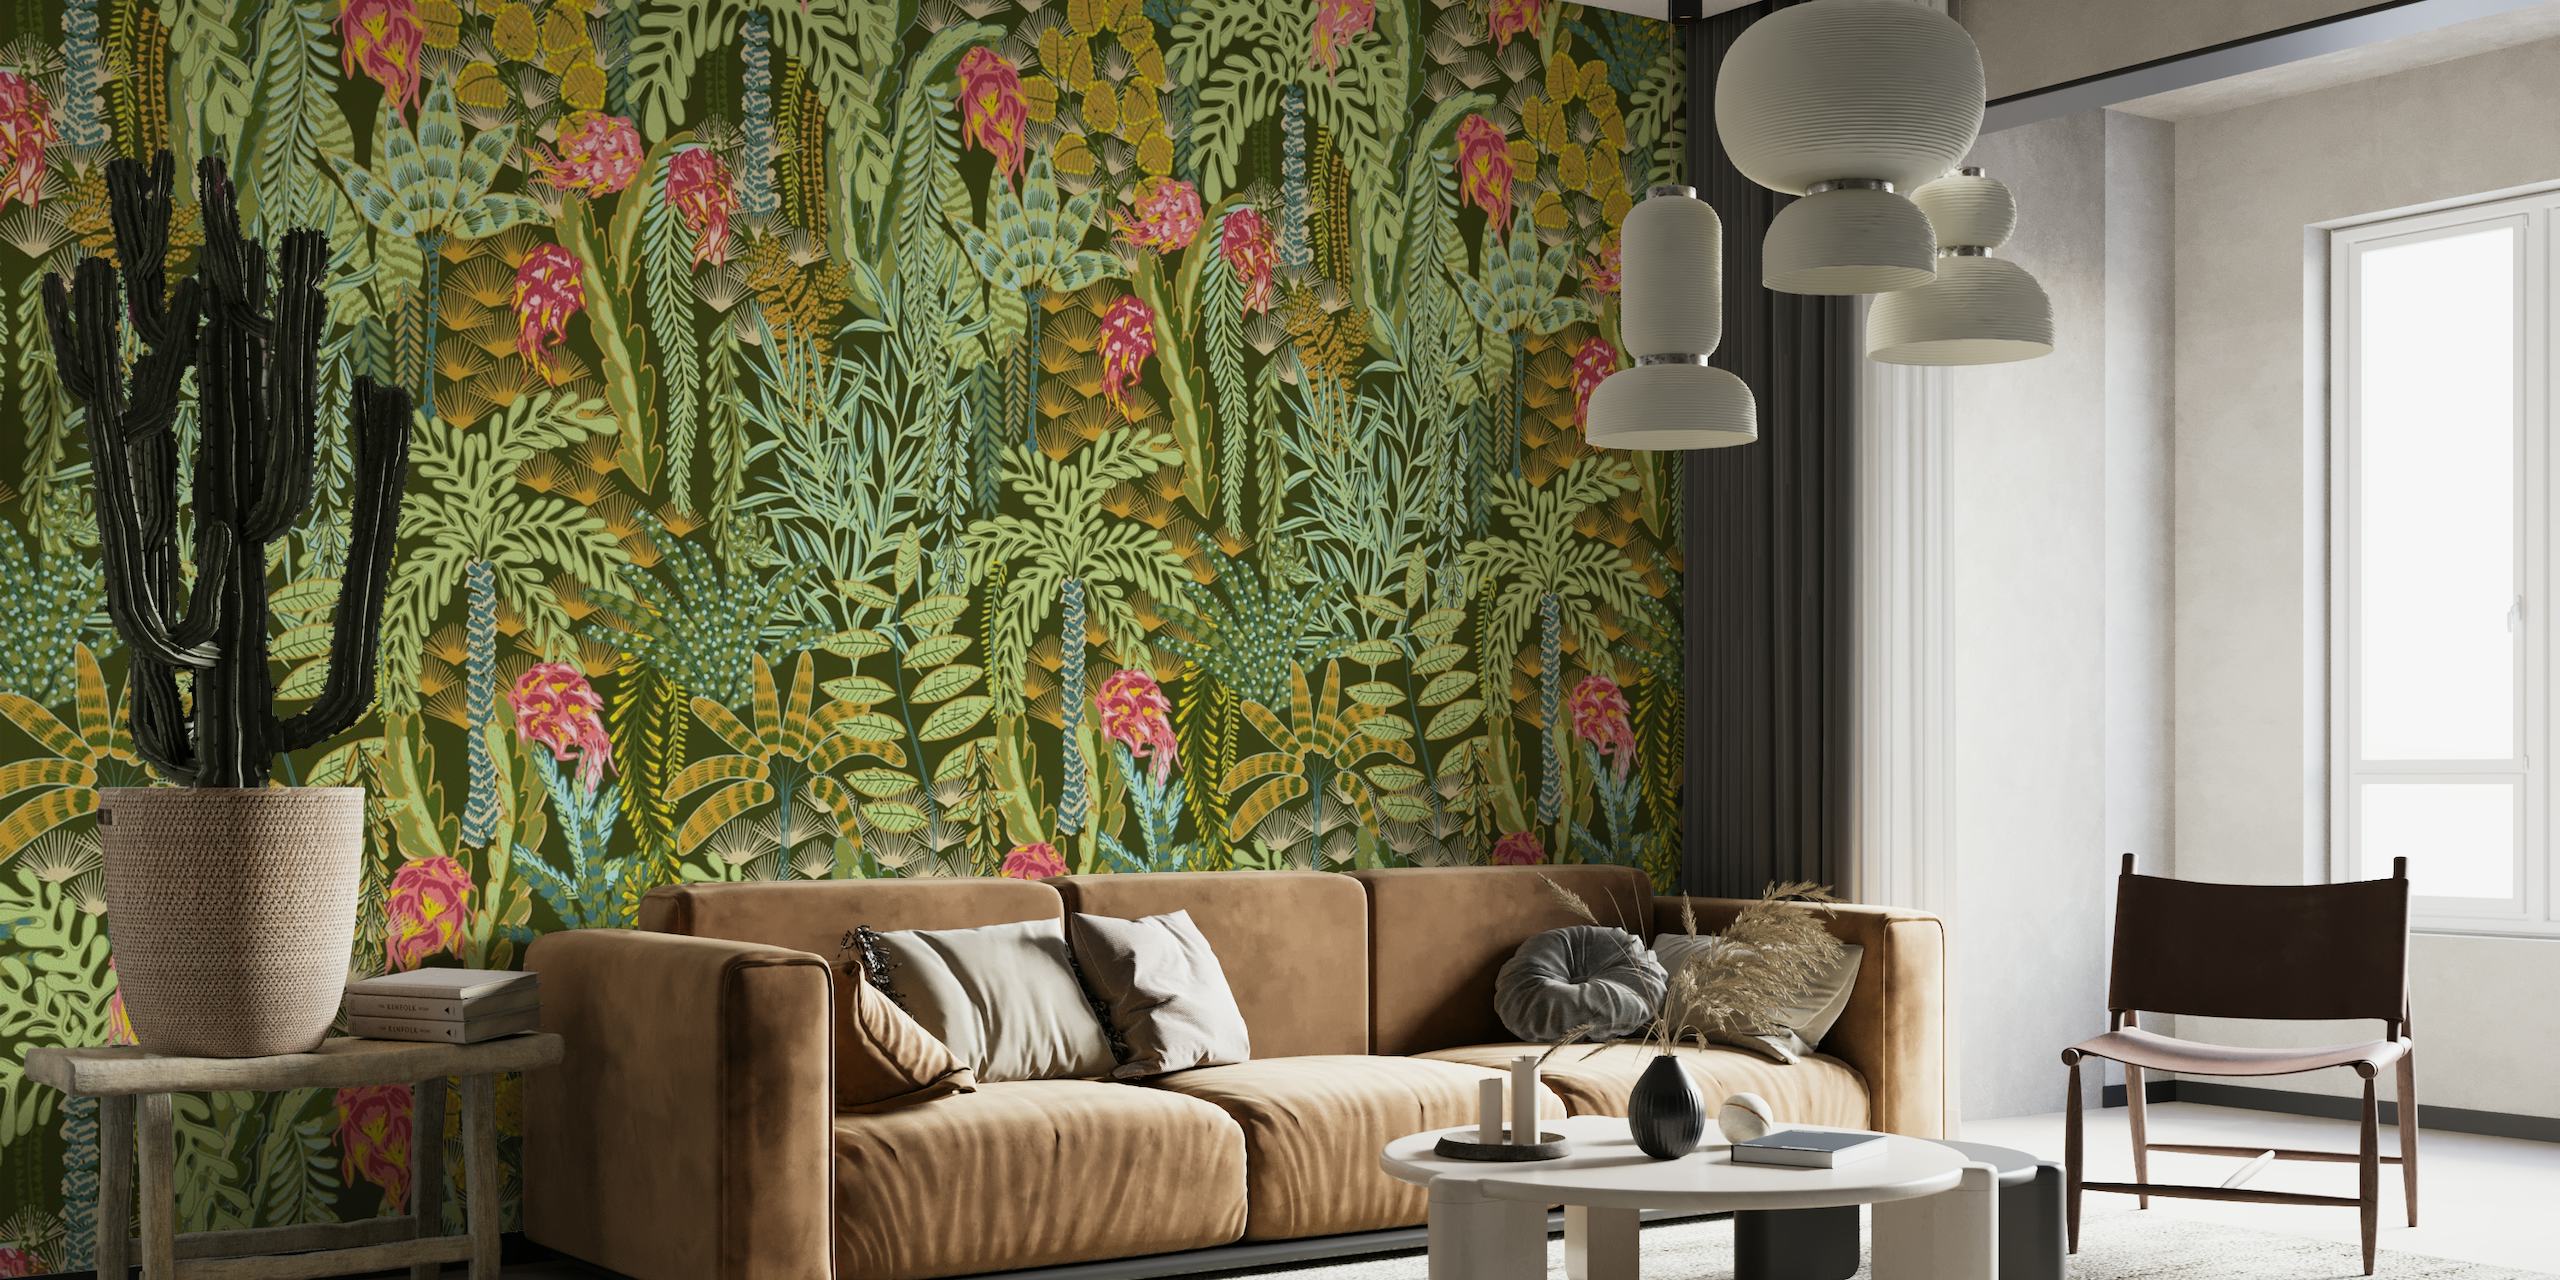 Tropical lounge with dragon fruit emerald papel pintado